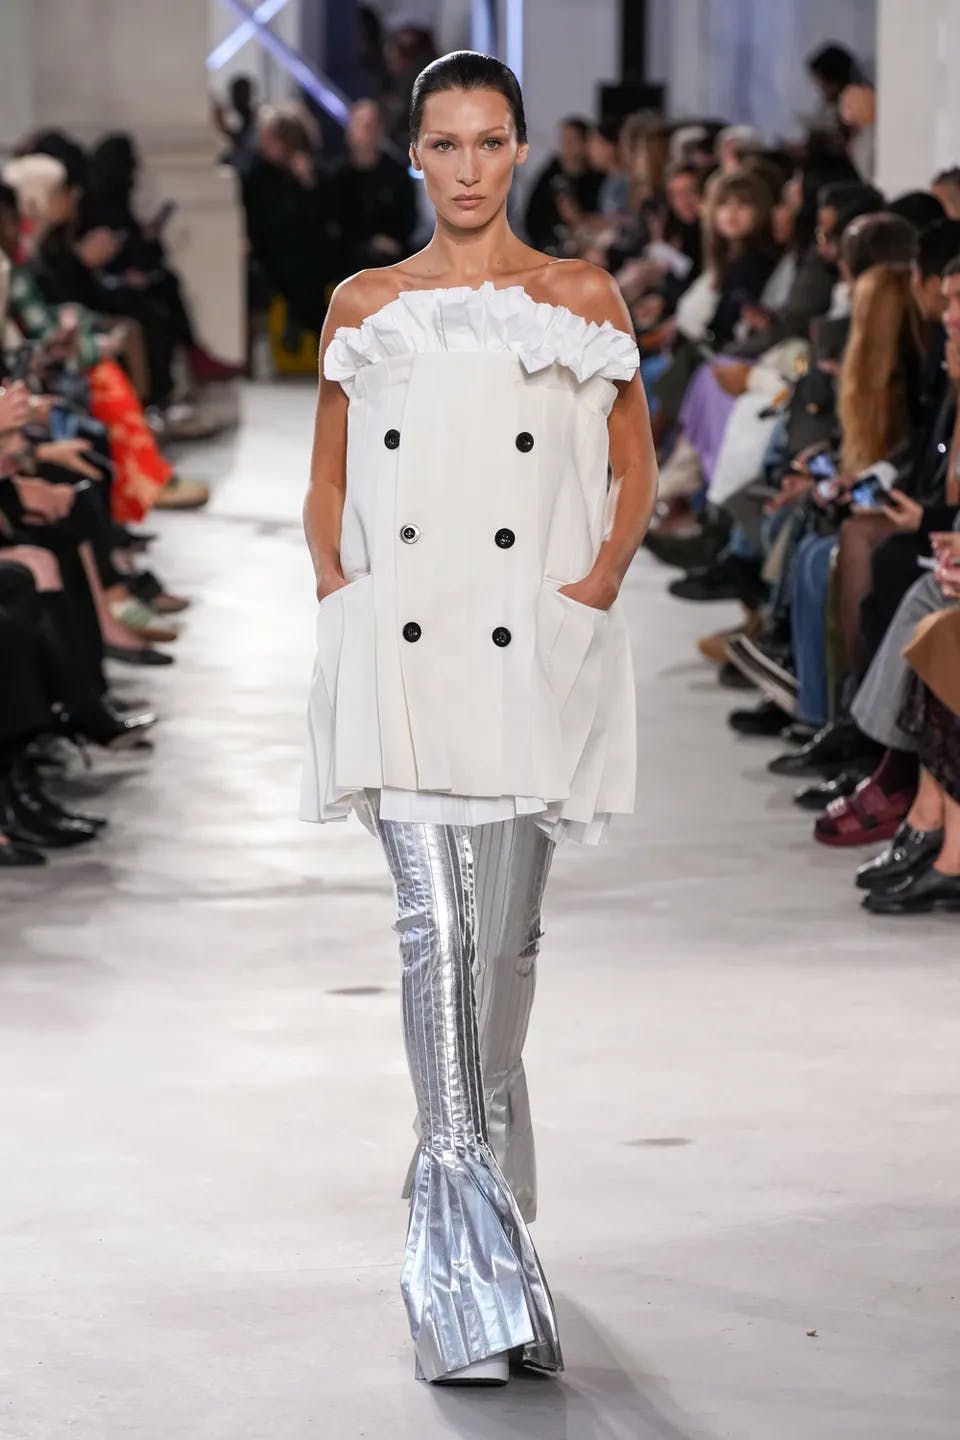 coat clothing apparel person human shoe footwear runway fashion